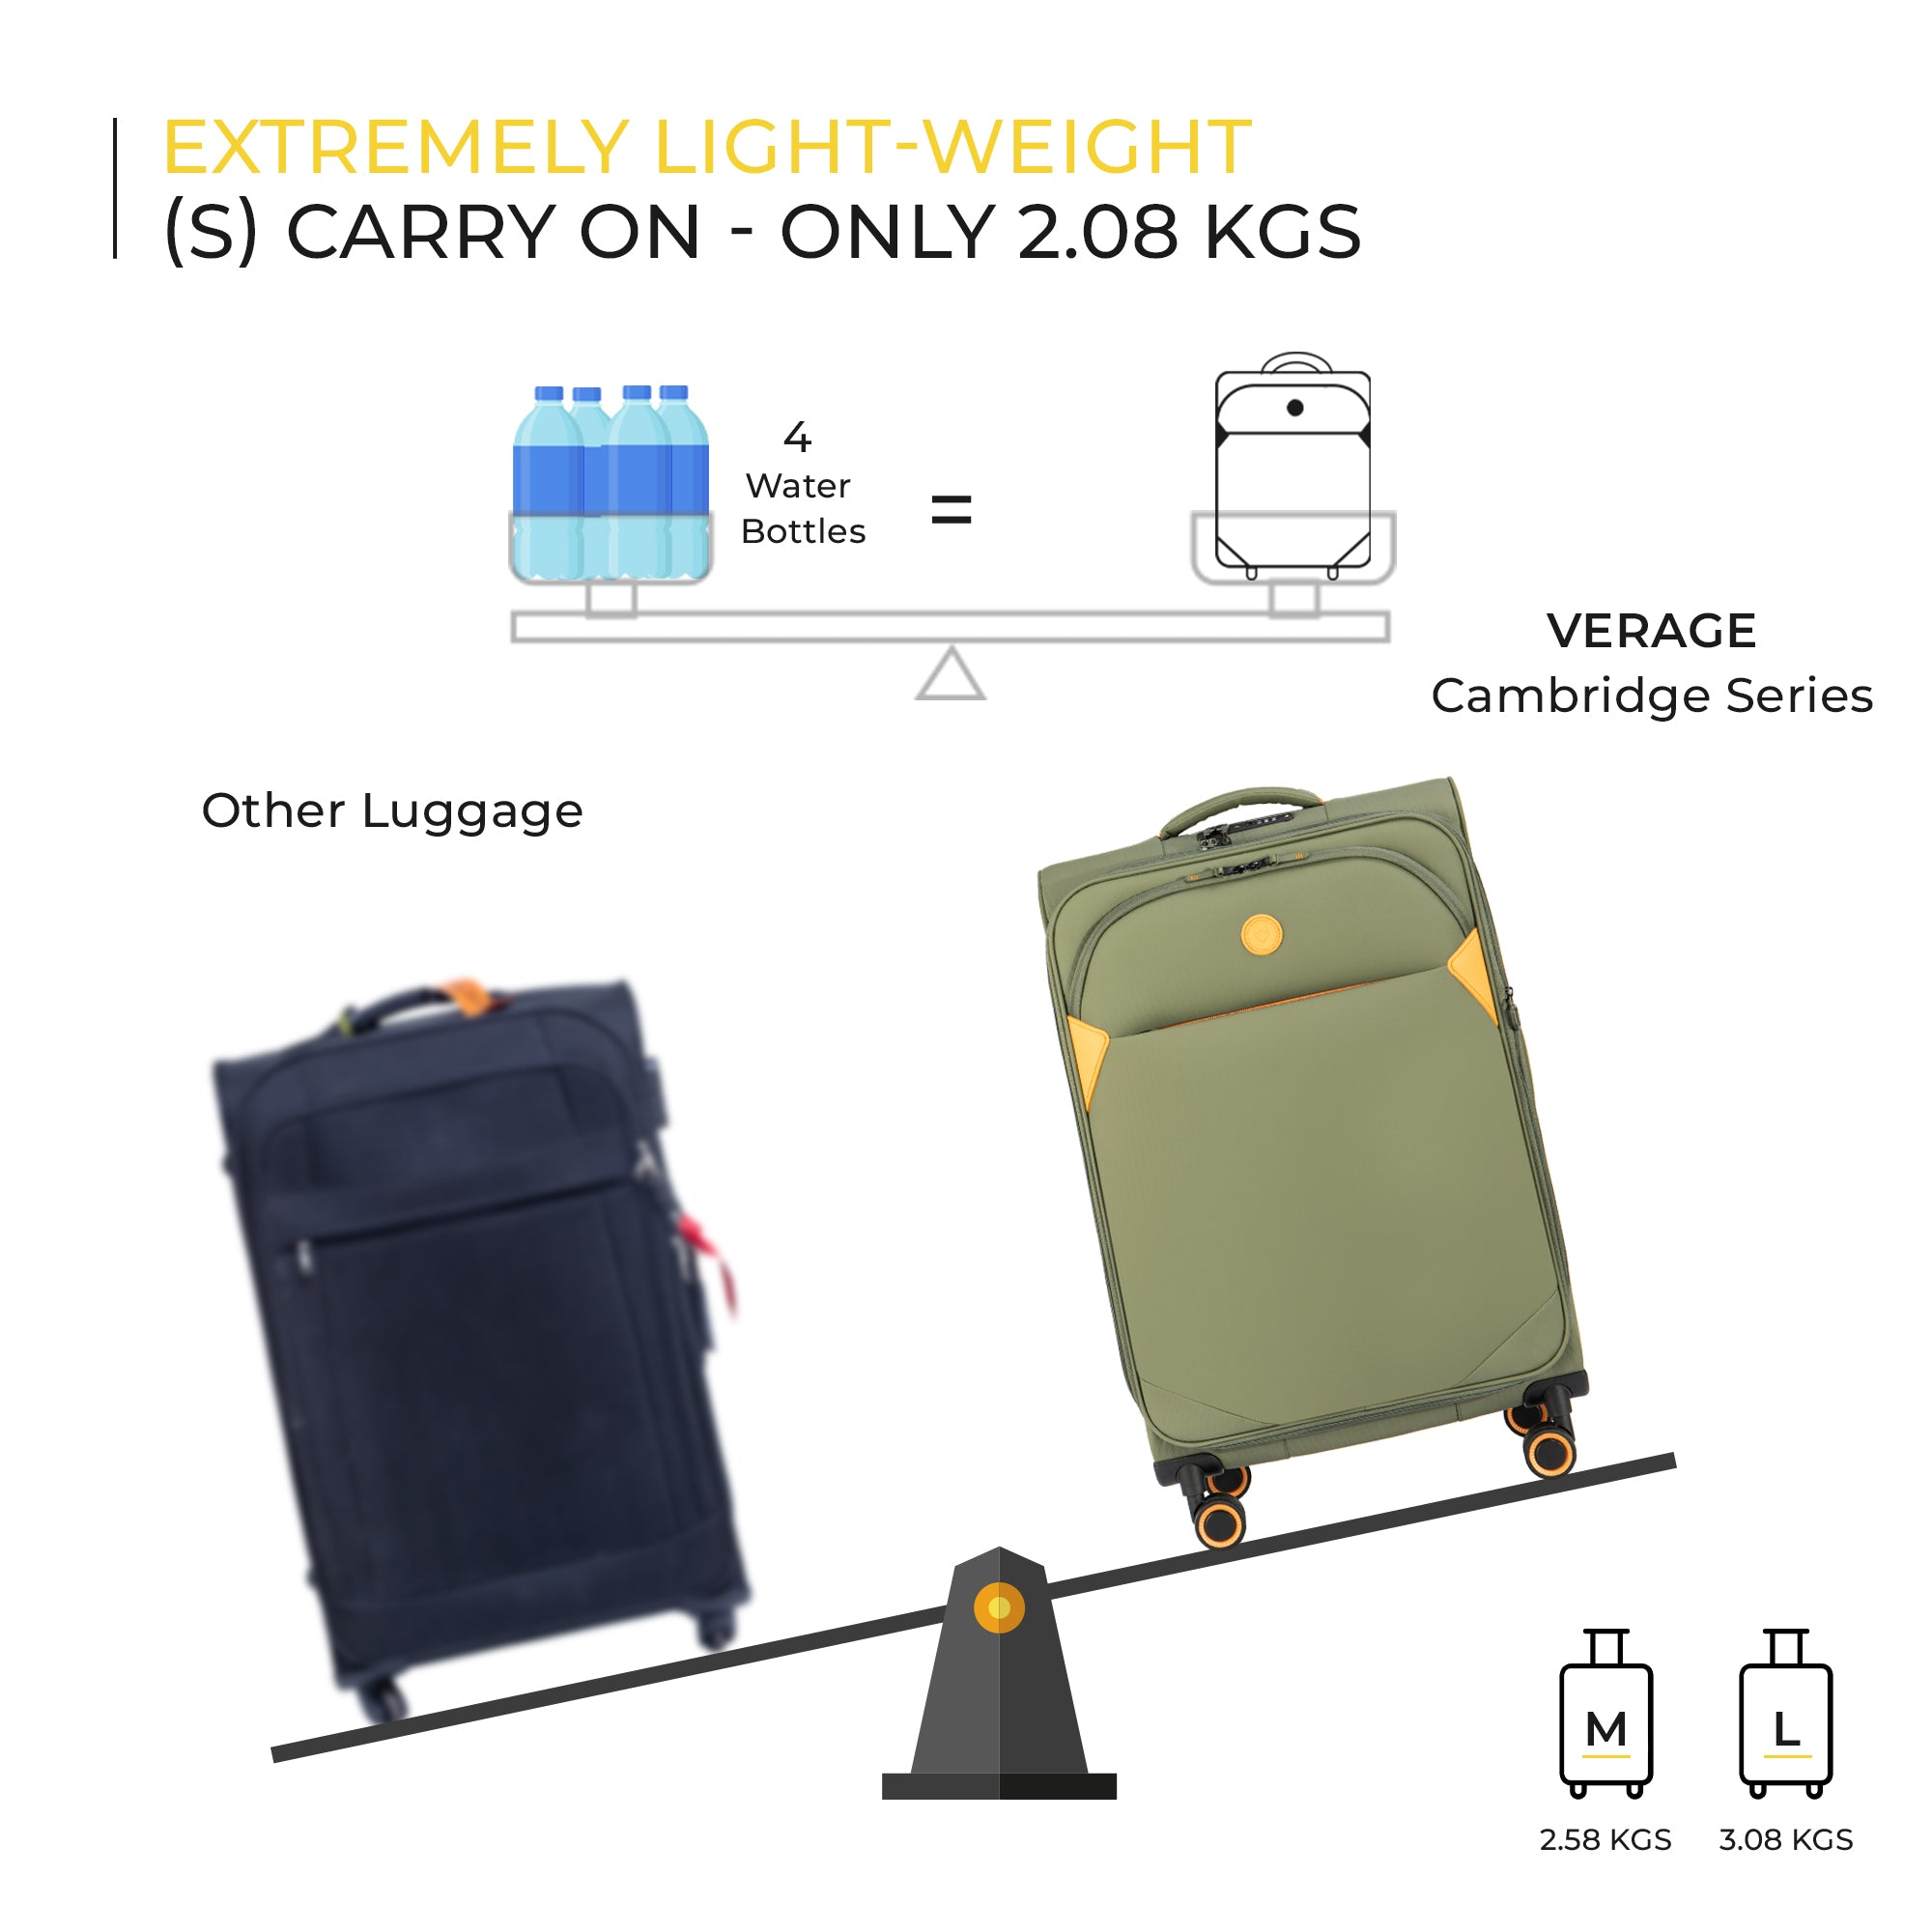 Cambridge (Cabin Carry-On Suitcase)